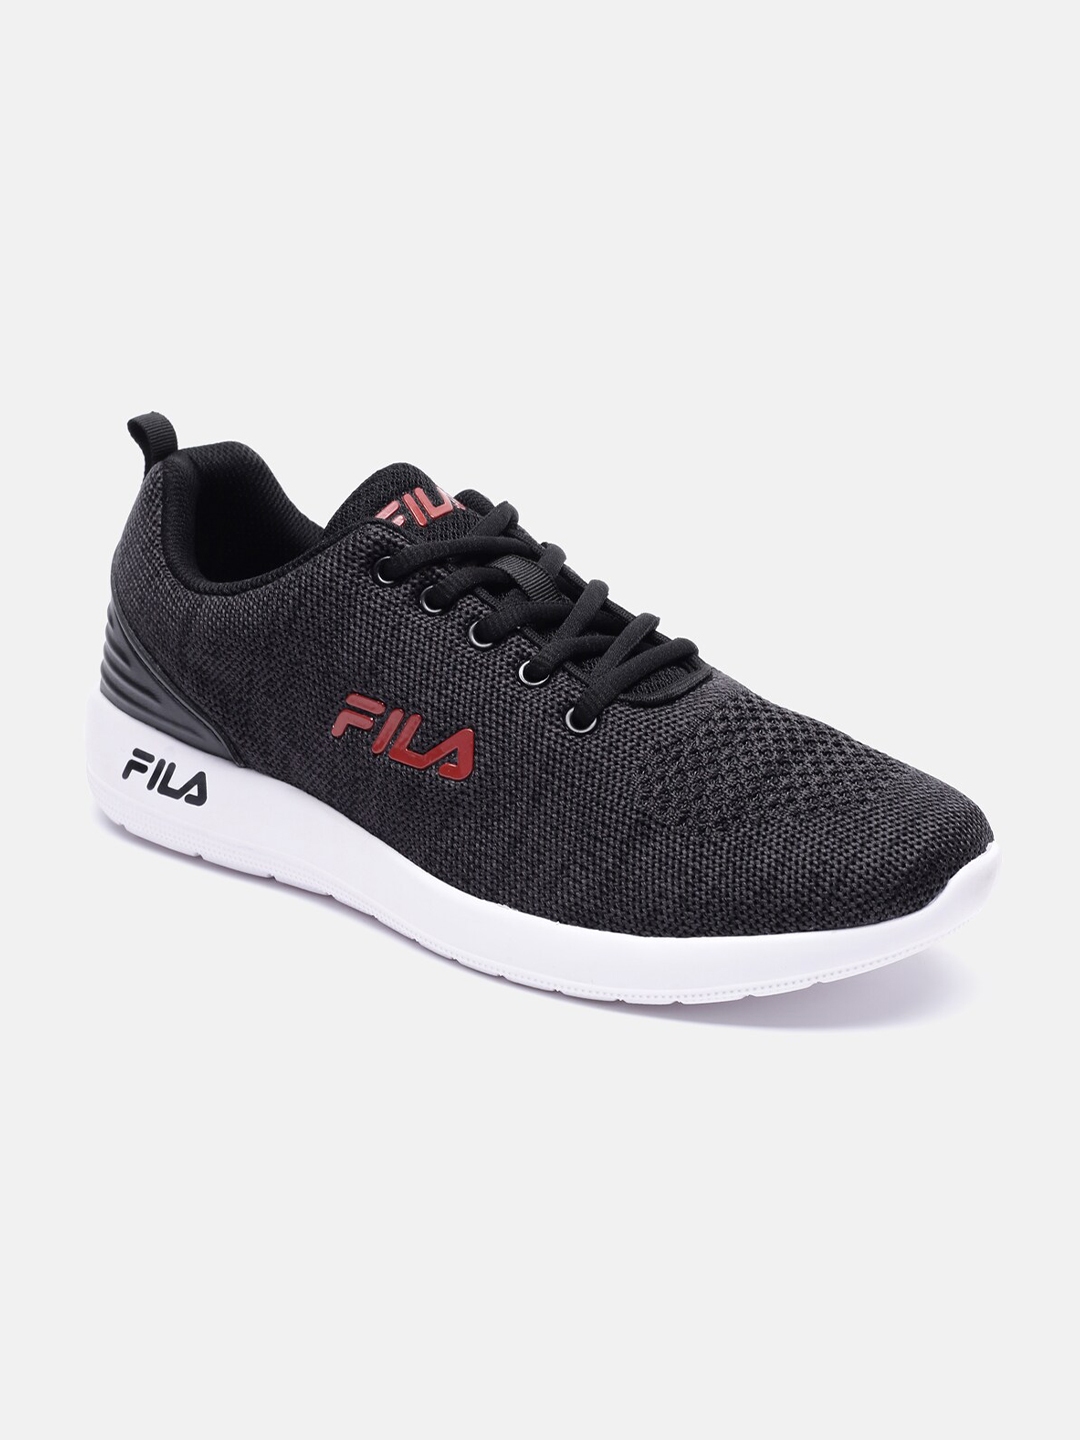 Buy FILA Men Black Running Shoes - Sports Shoes for Men 17762546 | Myntra